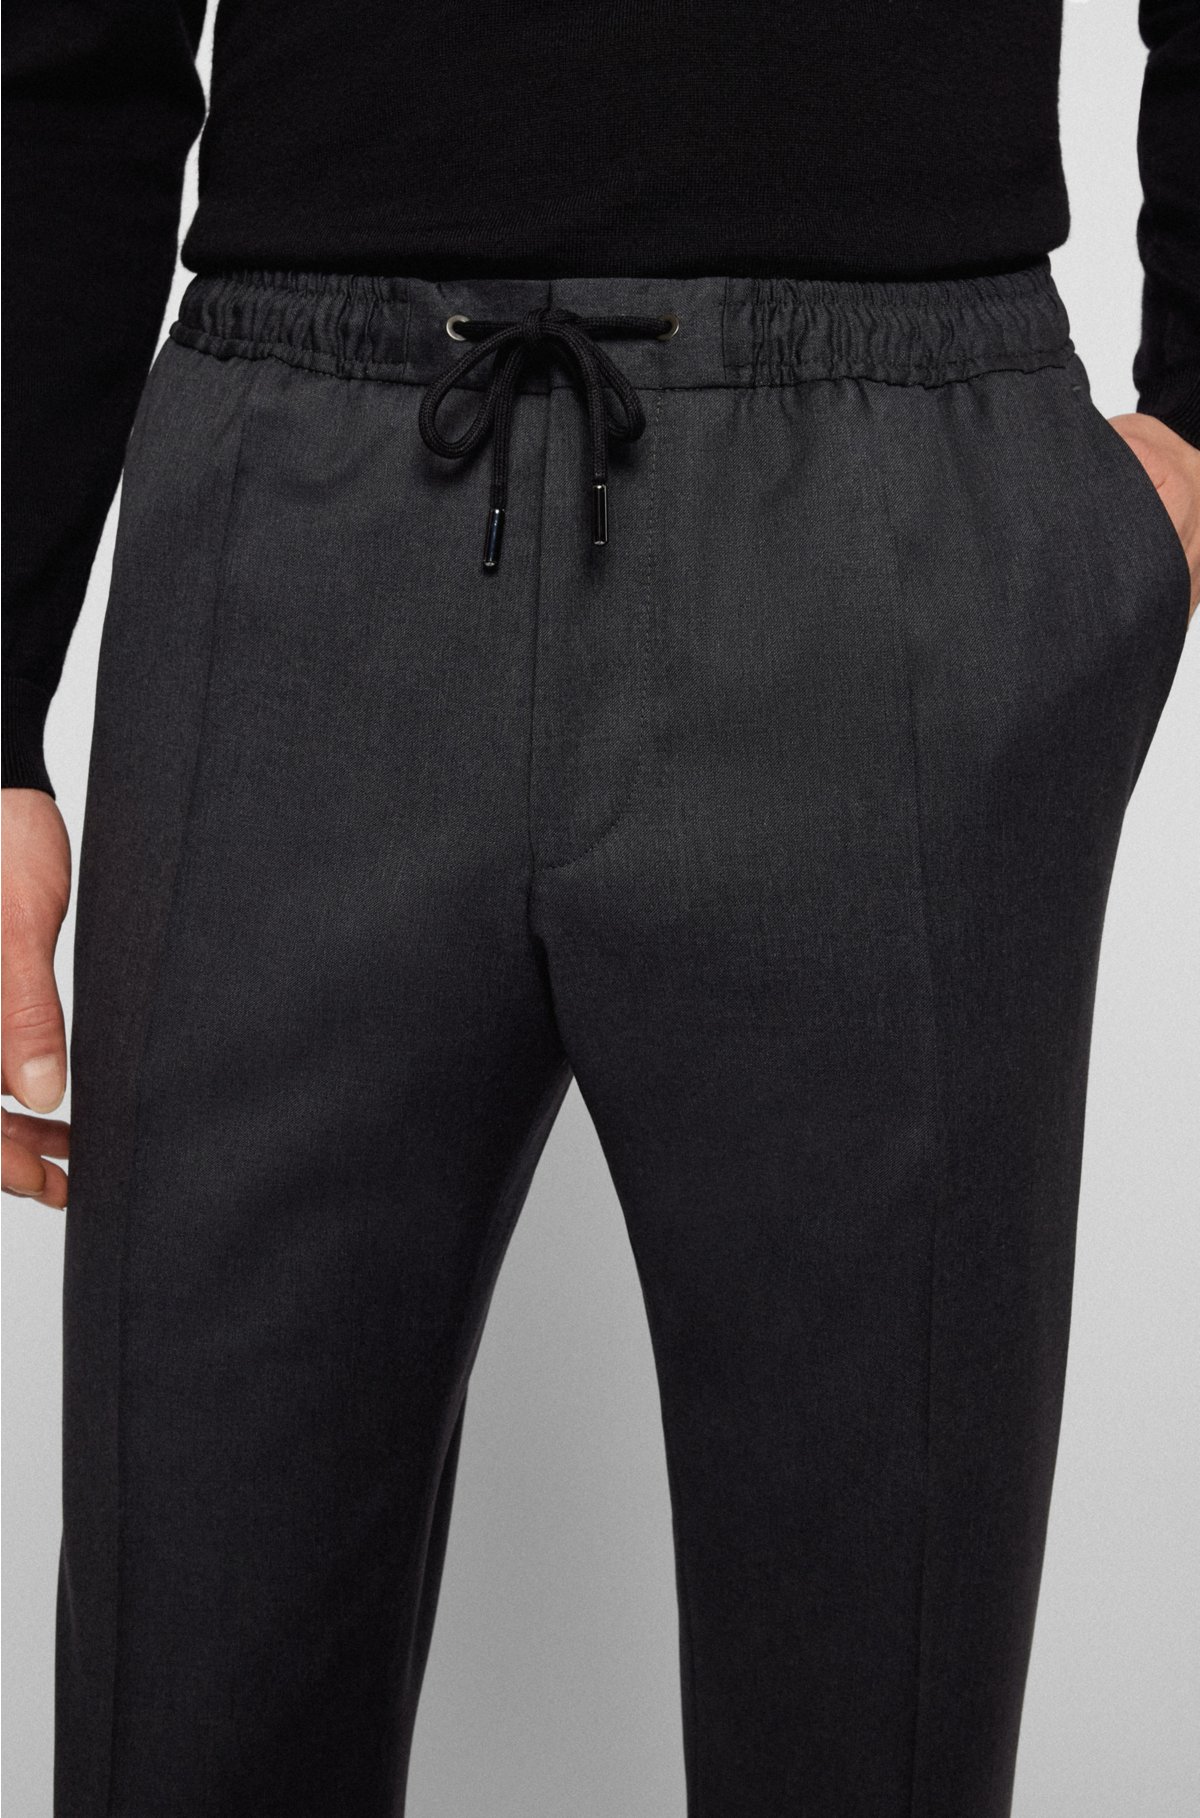 GG Virgin Wool Pants in Grey - Gucci